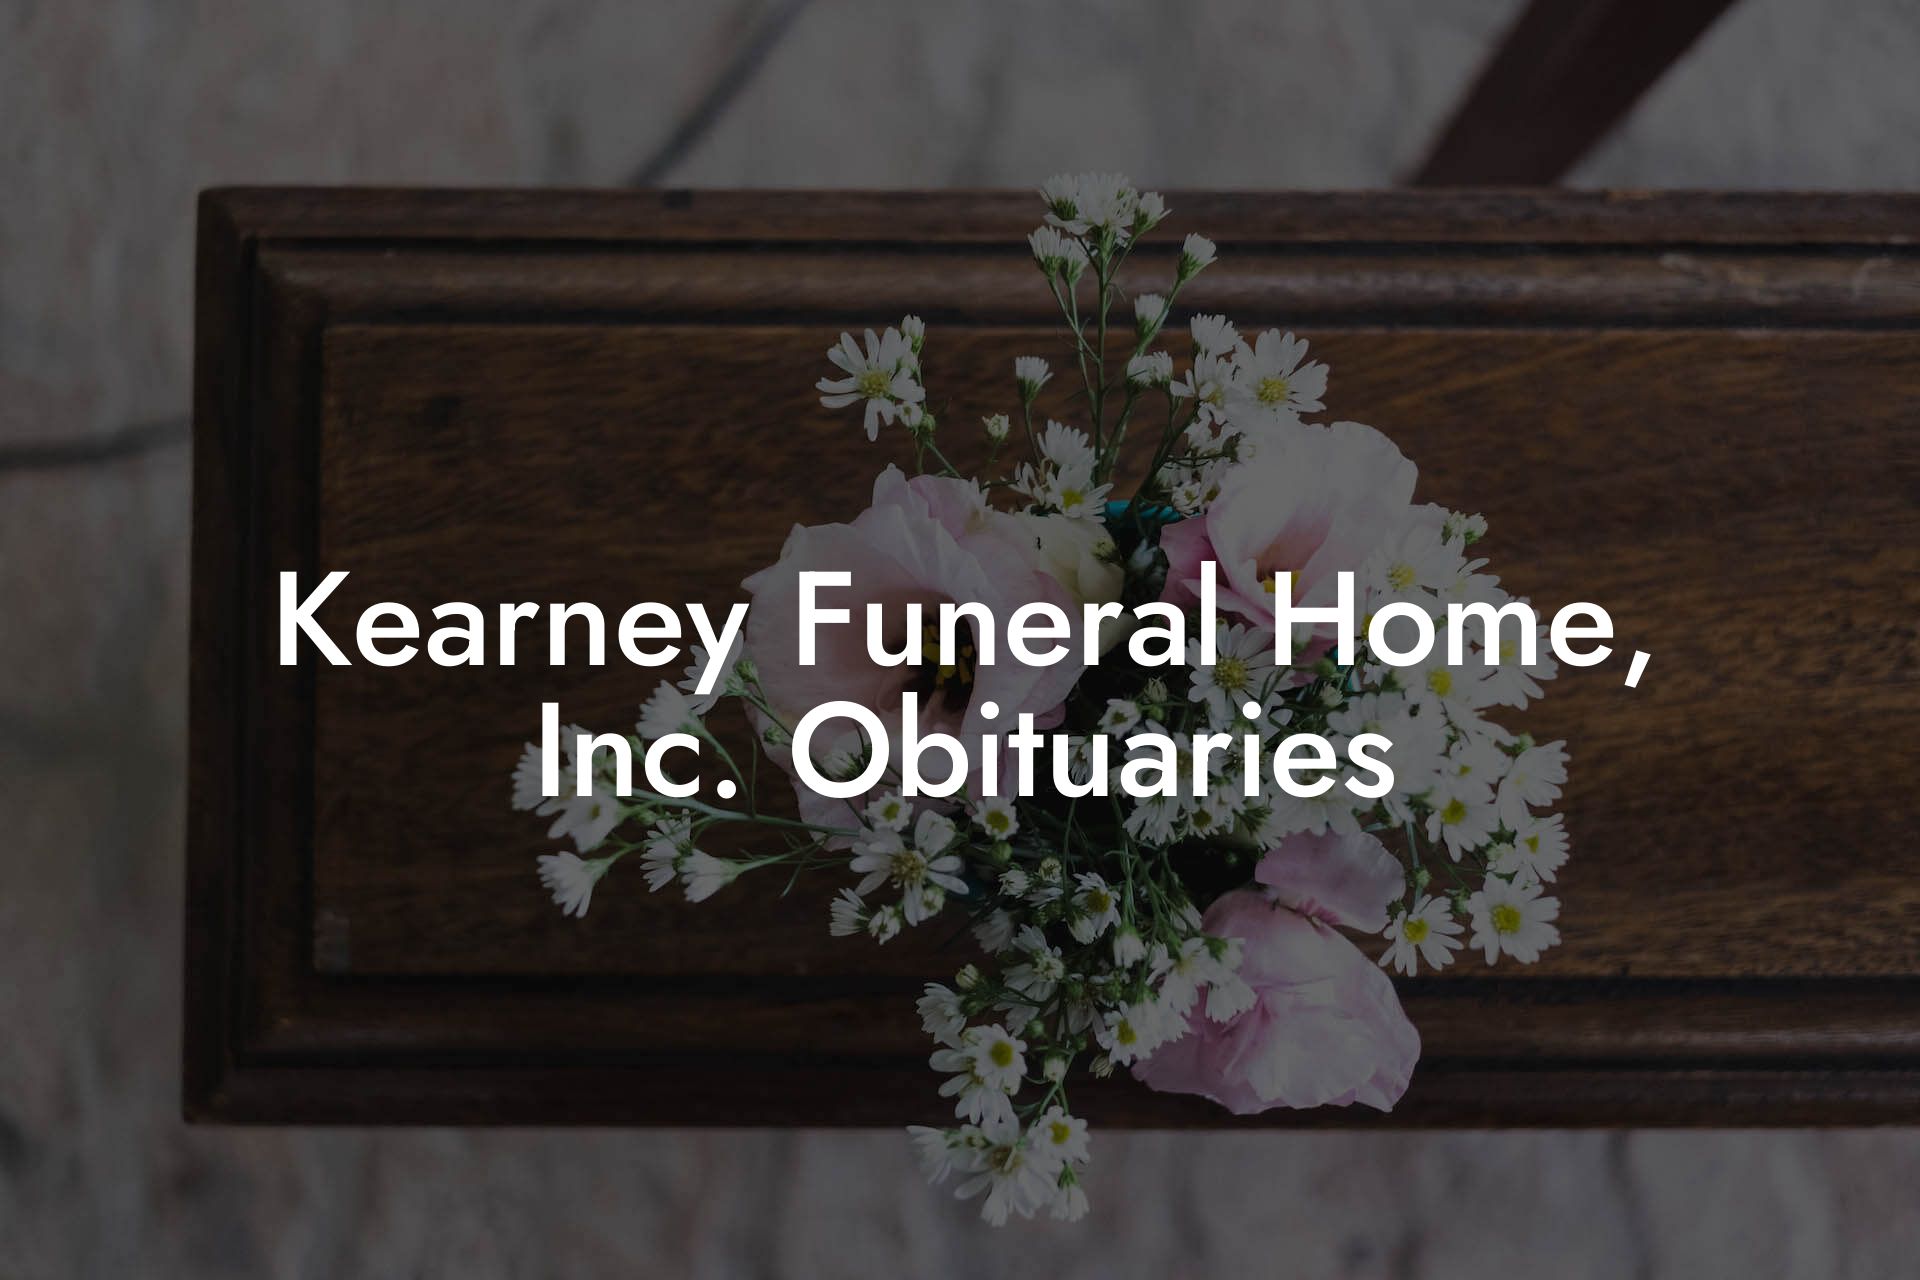 Kearney Funeral Home, Inc. Obituaries